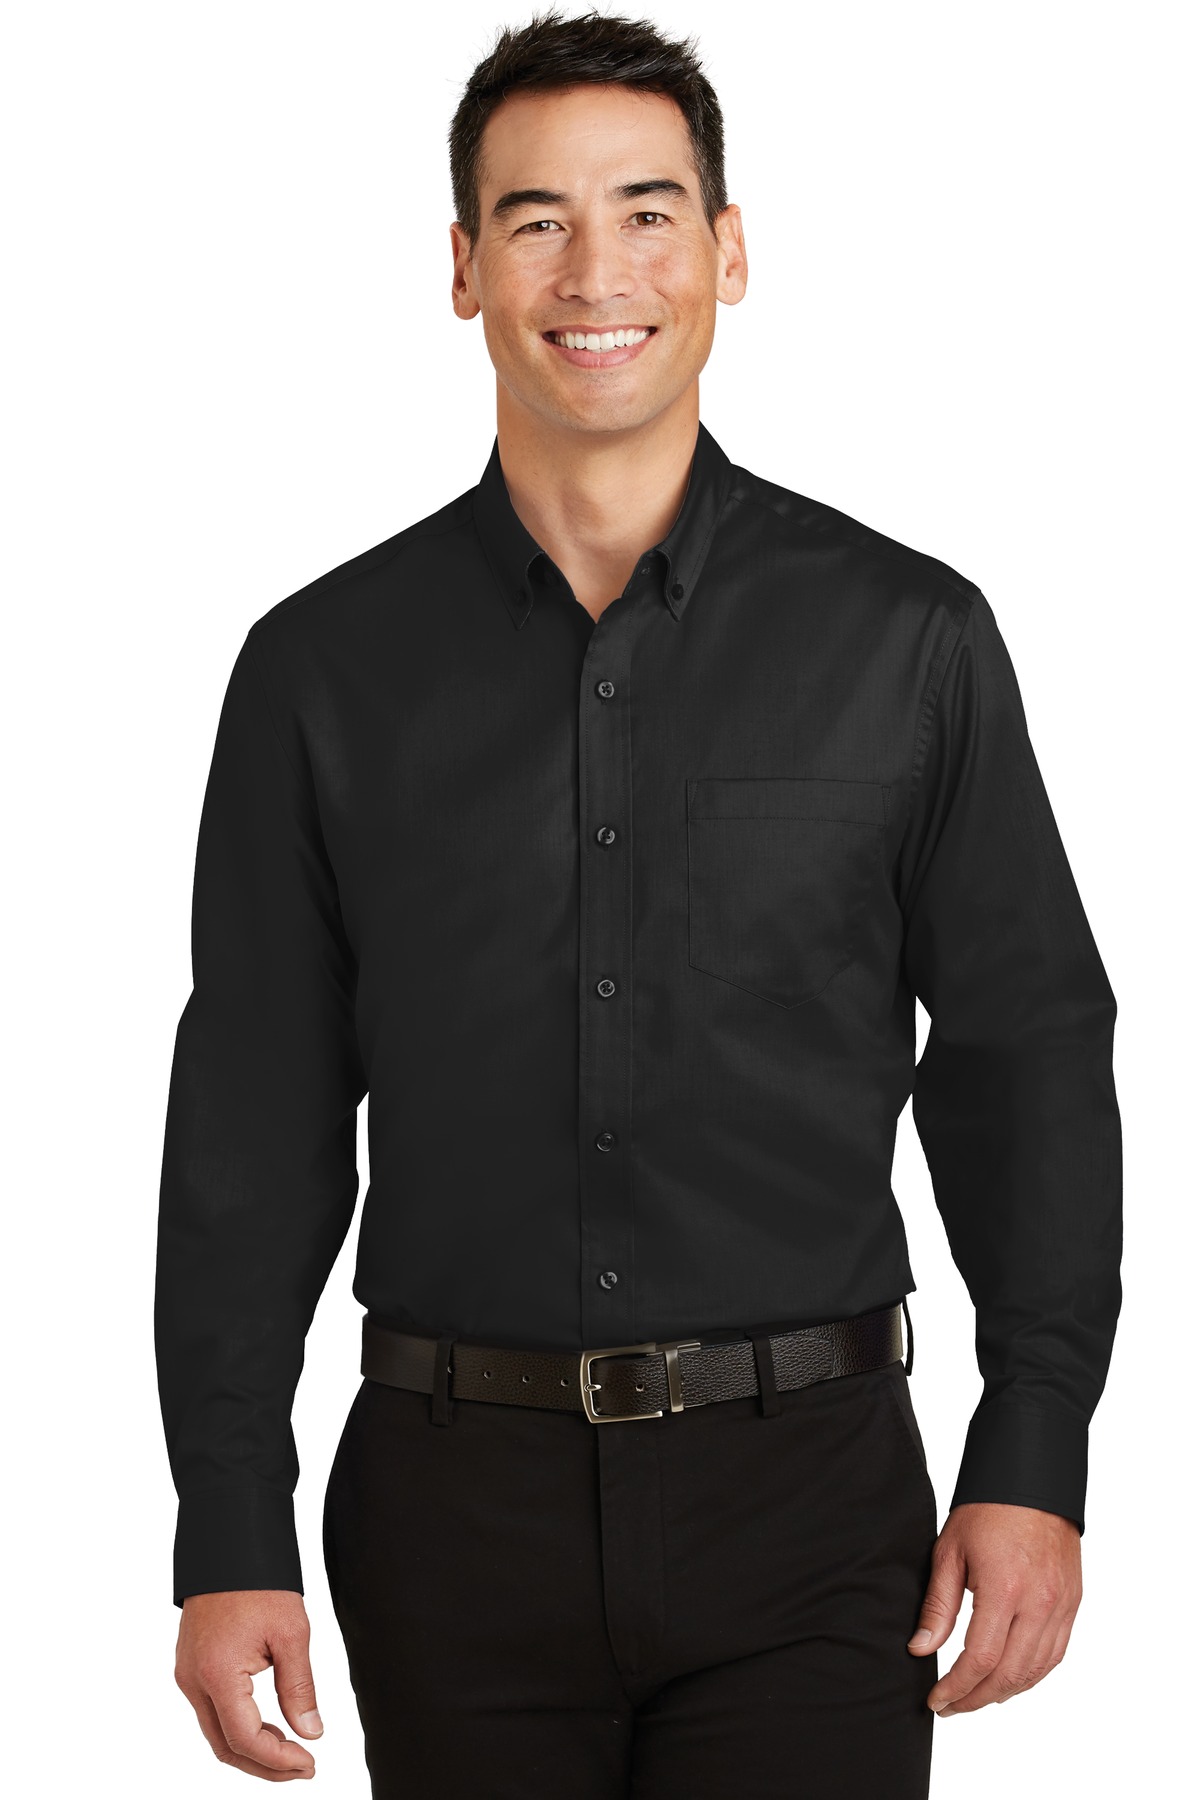 Port Authority Woven Shirts for Hospitality ® SuperPro Twill Shirt.-Port Authority